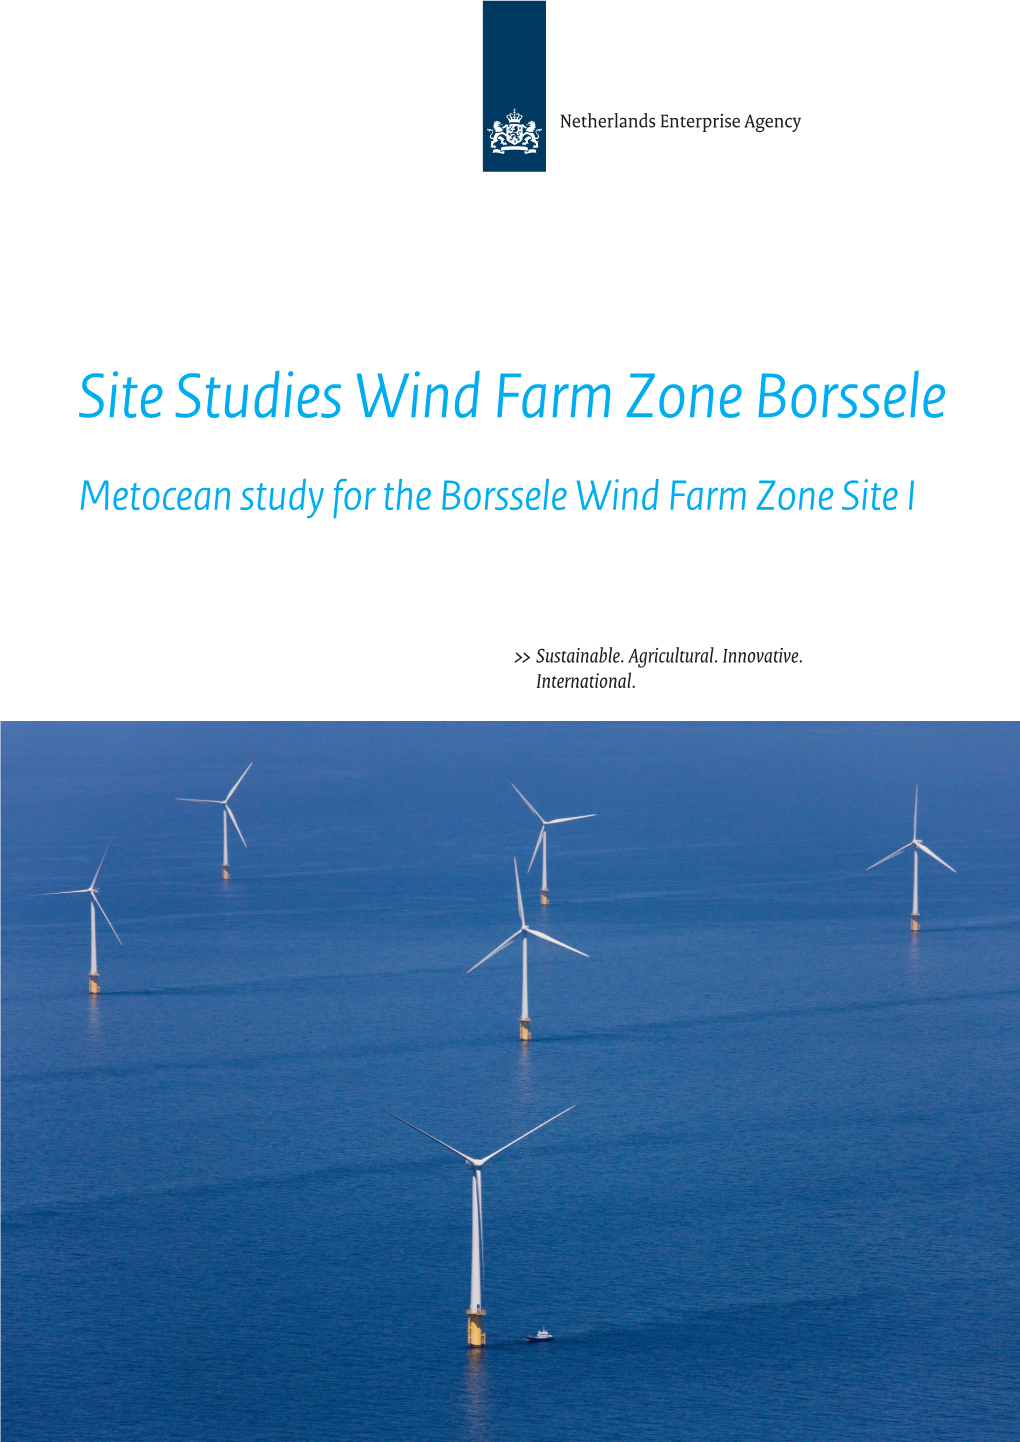 Site Studies Wind Farm Zone Borssele Metocean Study for the Borssele Wind Farm Zone Site I Author Deltares